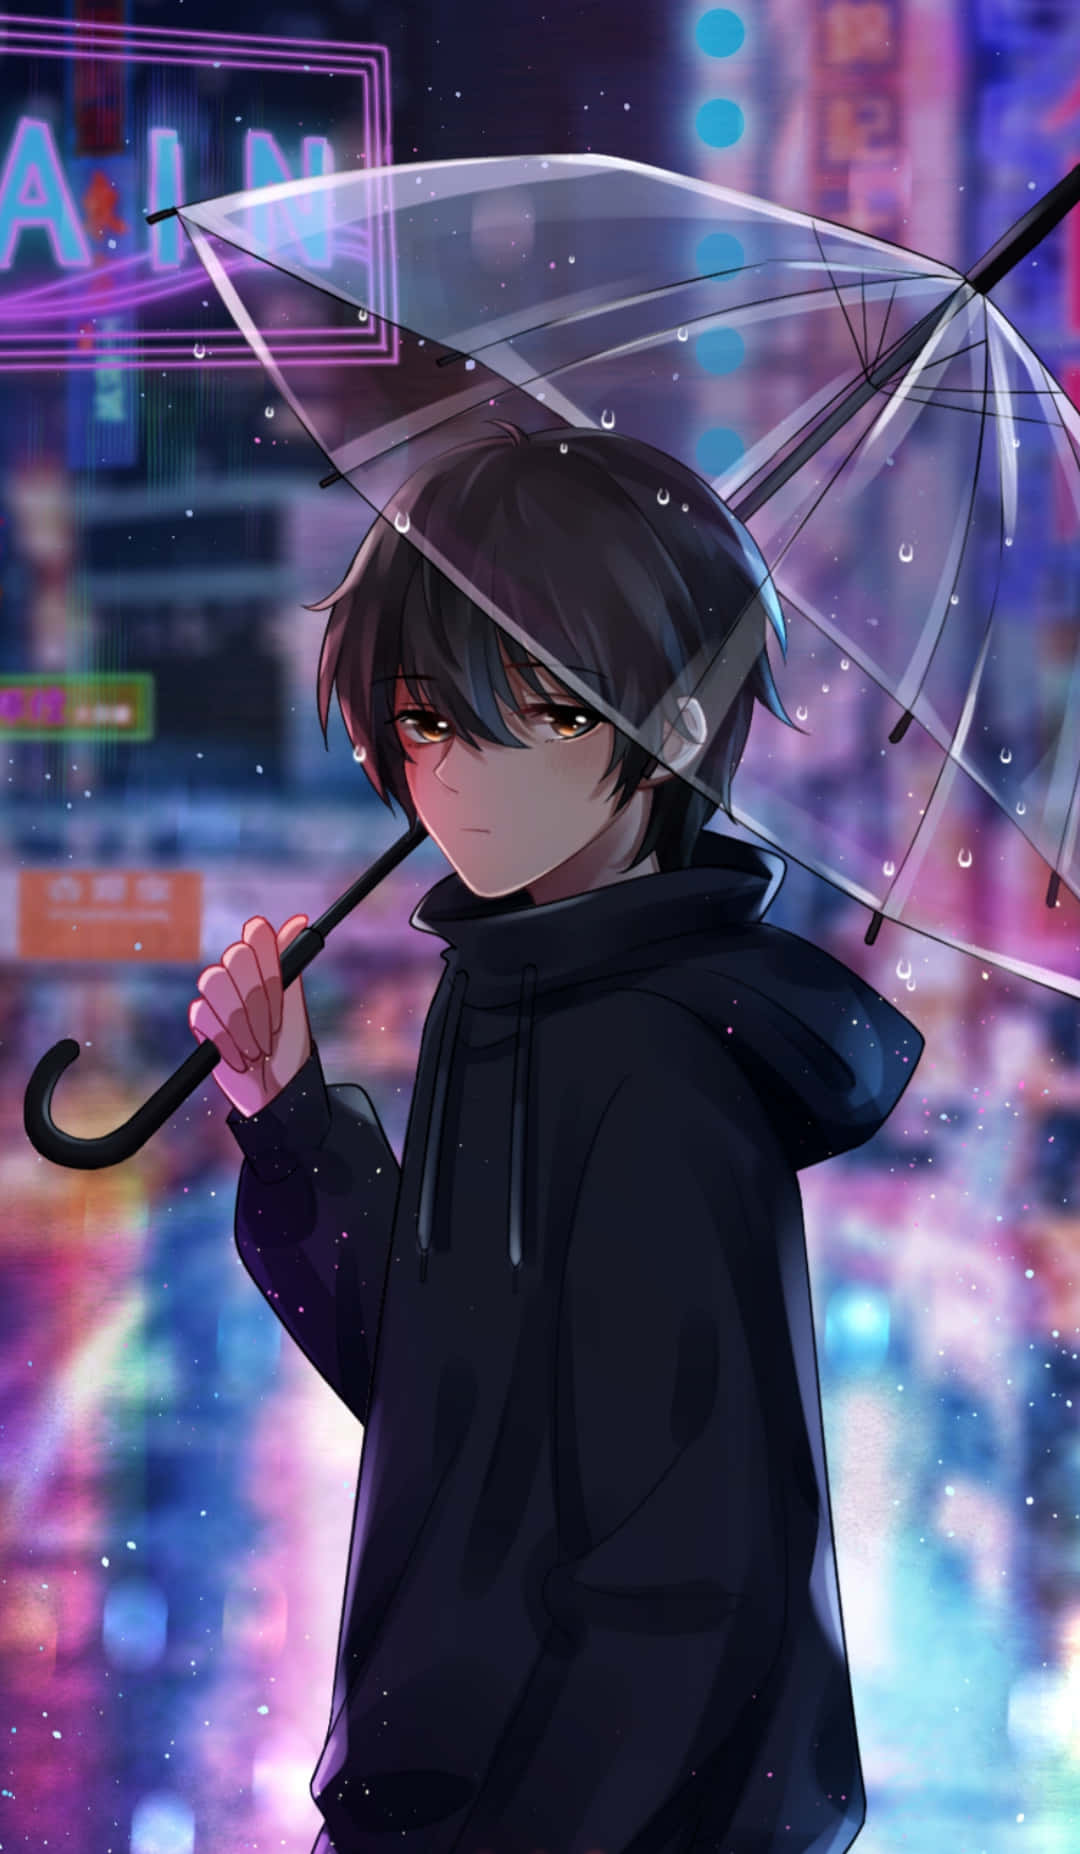 Anime Boy With Umbrella Phone